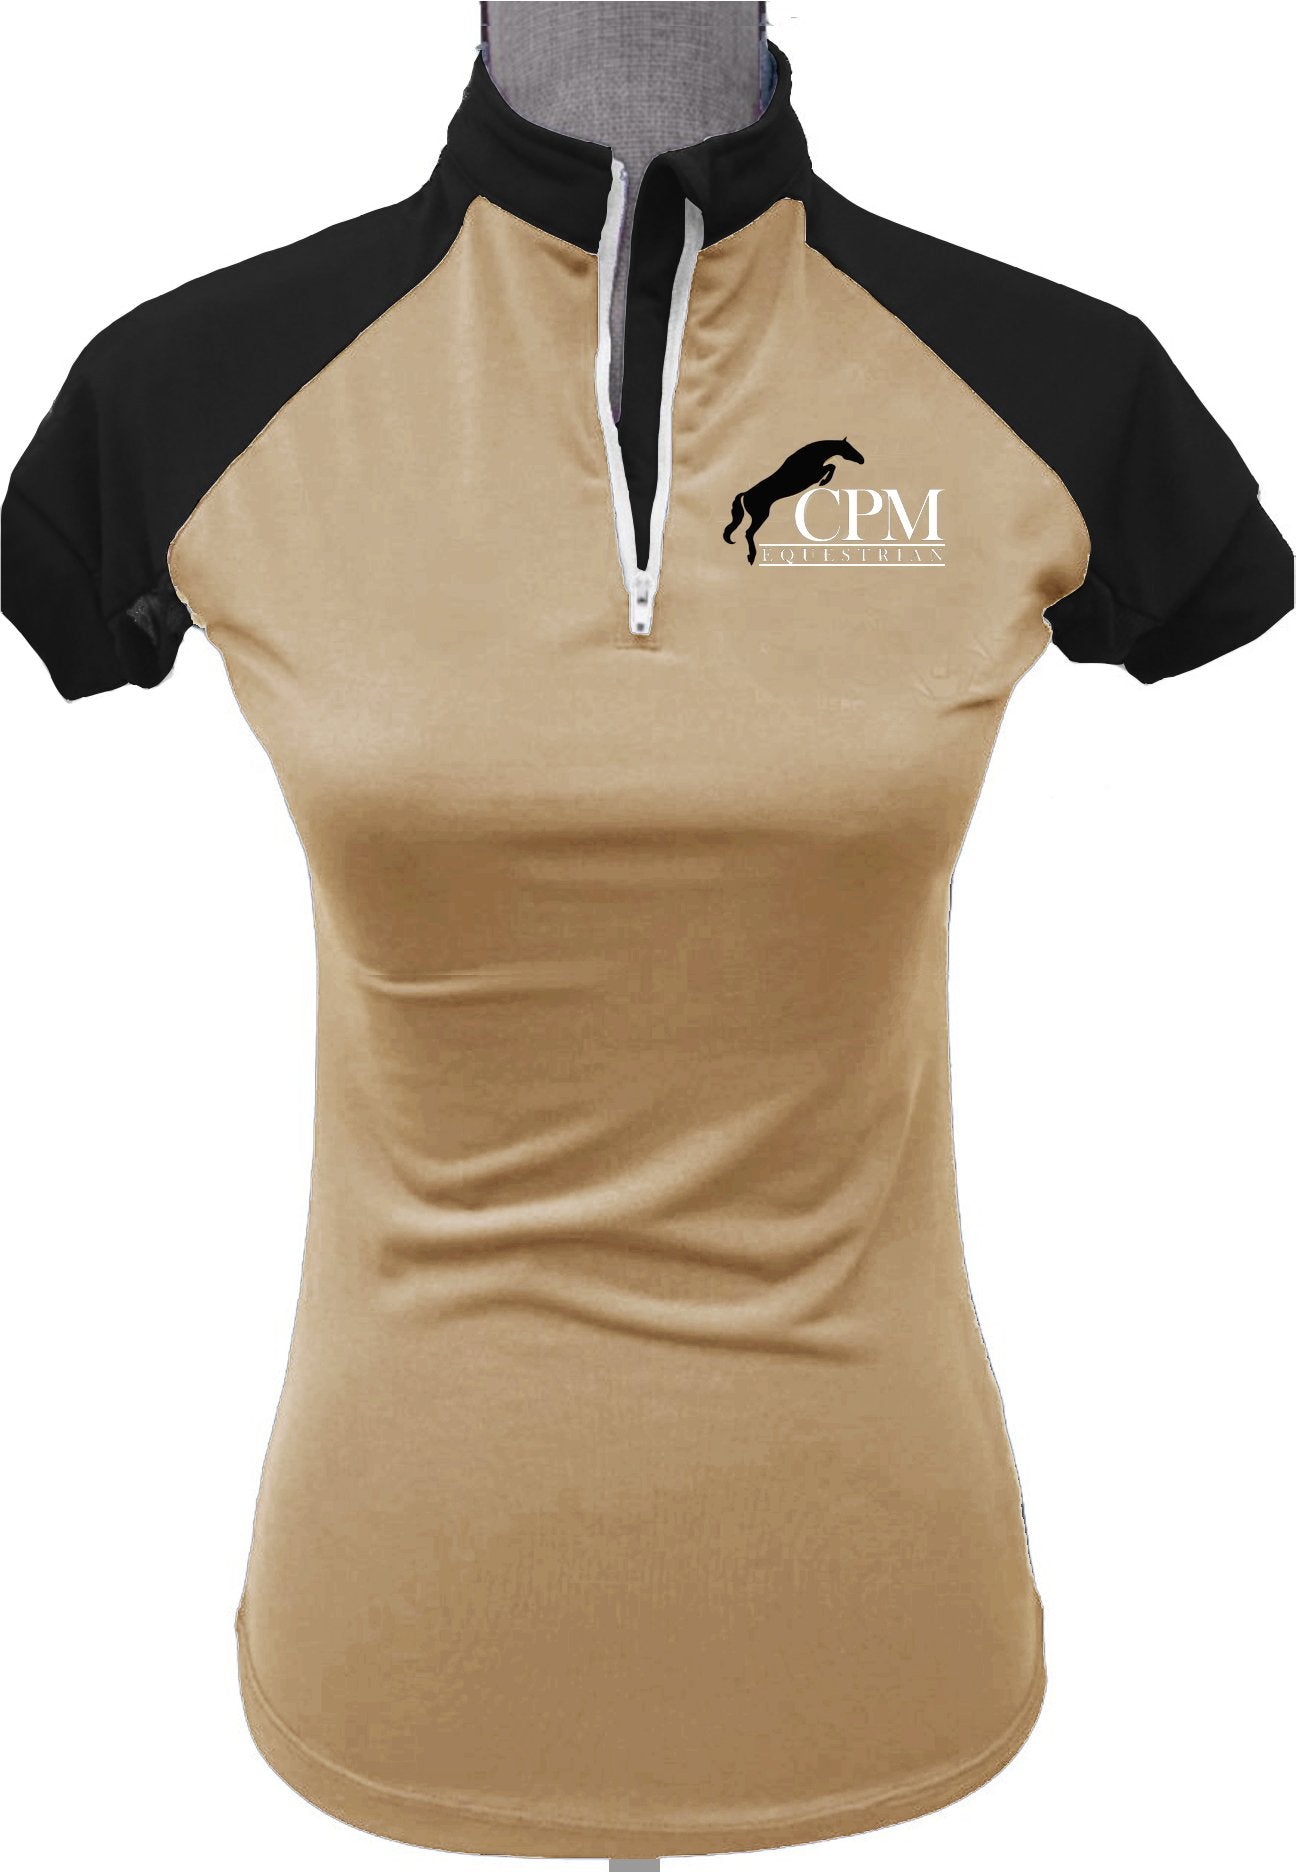 CPM Equestrian Short Sleeve Custom Sun Shirt - Tan    Adult + Youth Sizes